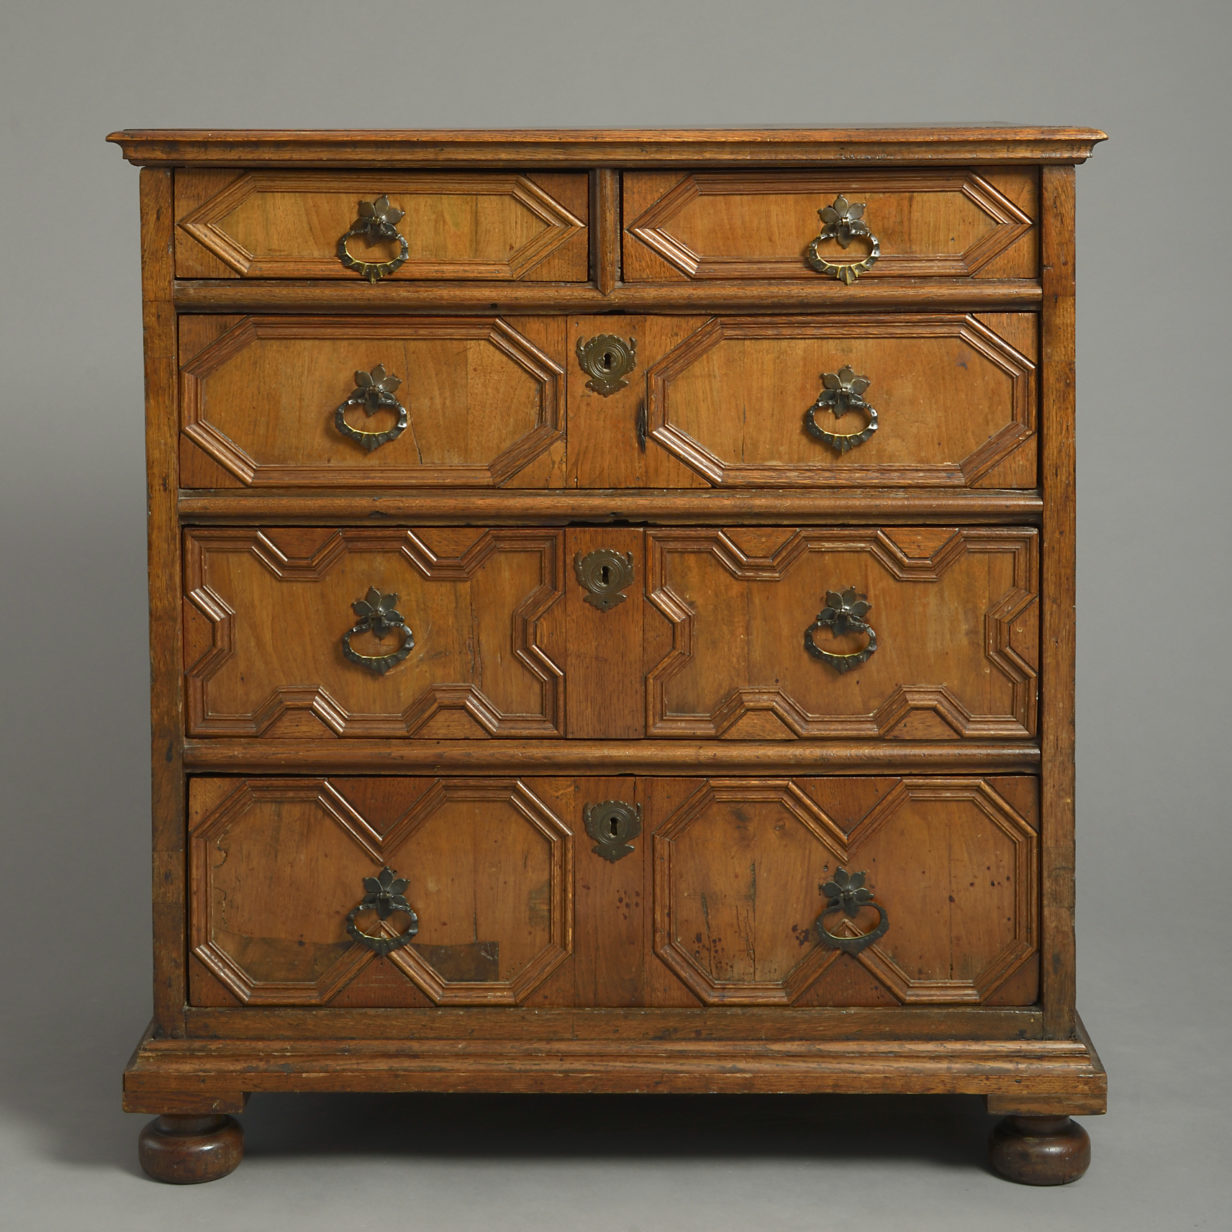 17th century charles ii period geometric oak chest of drawers